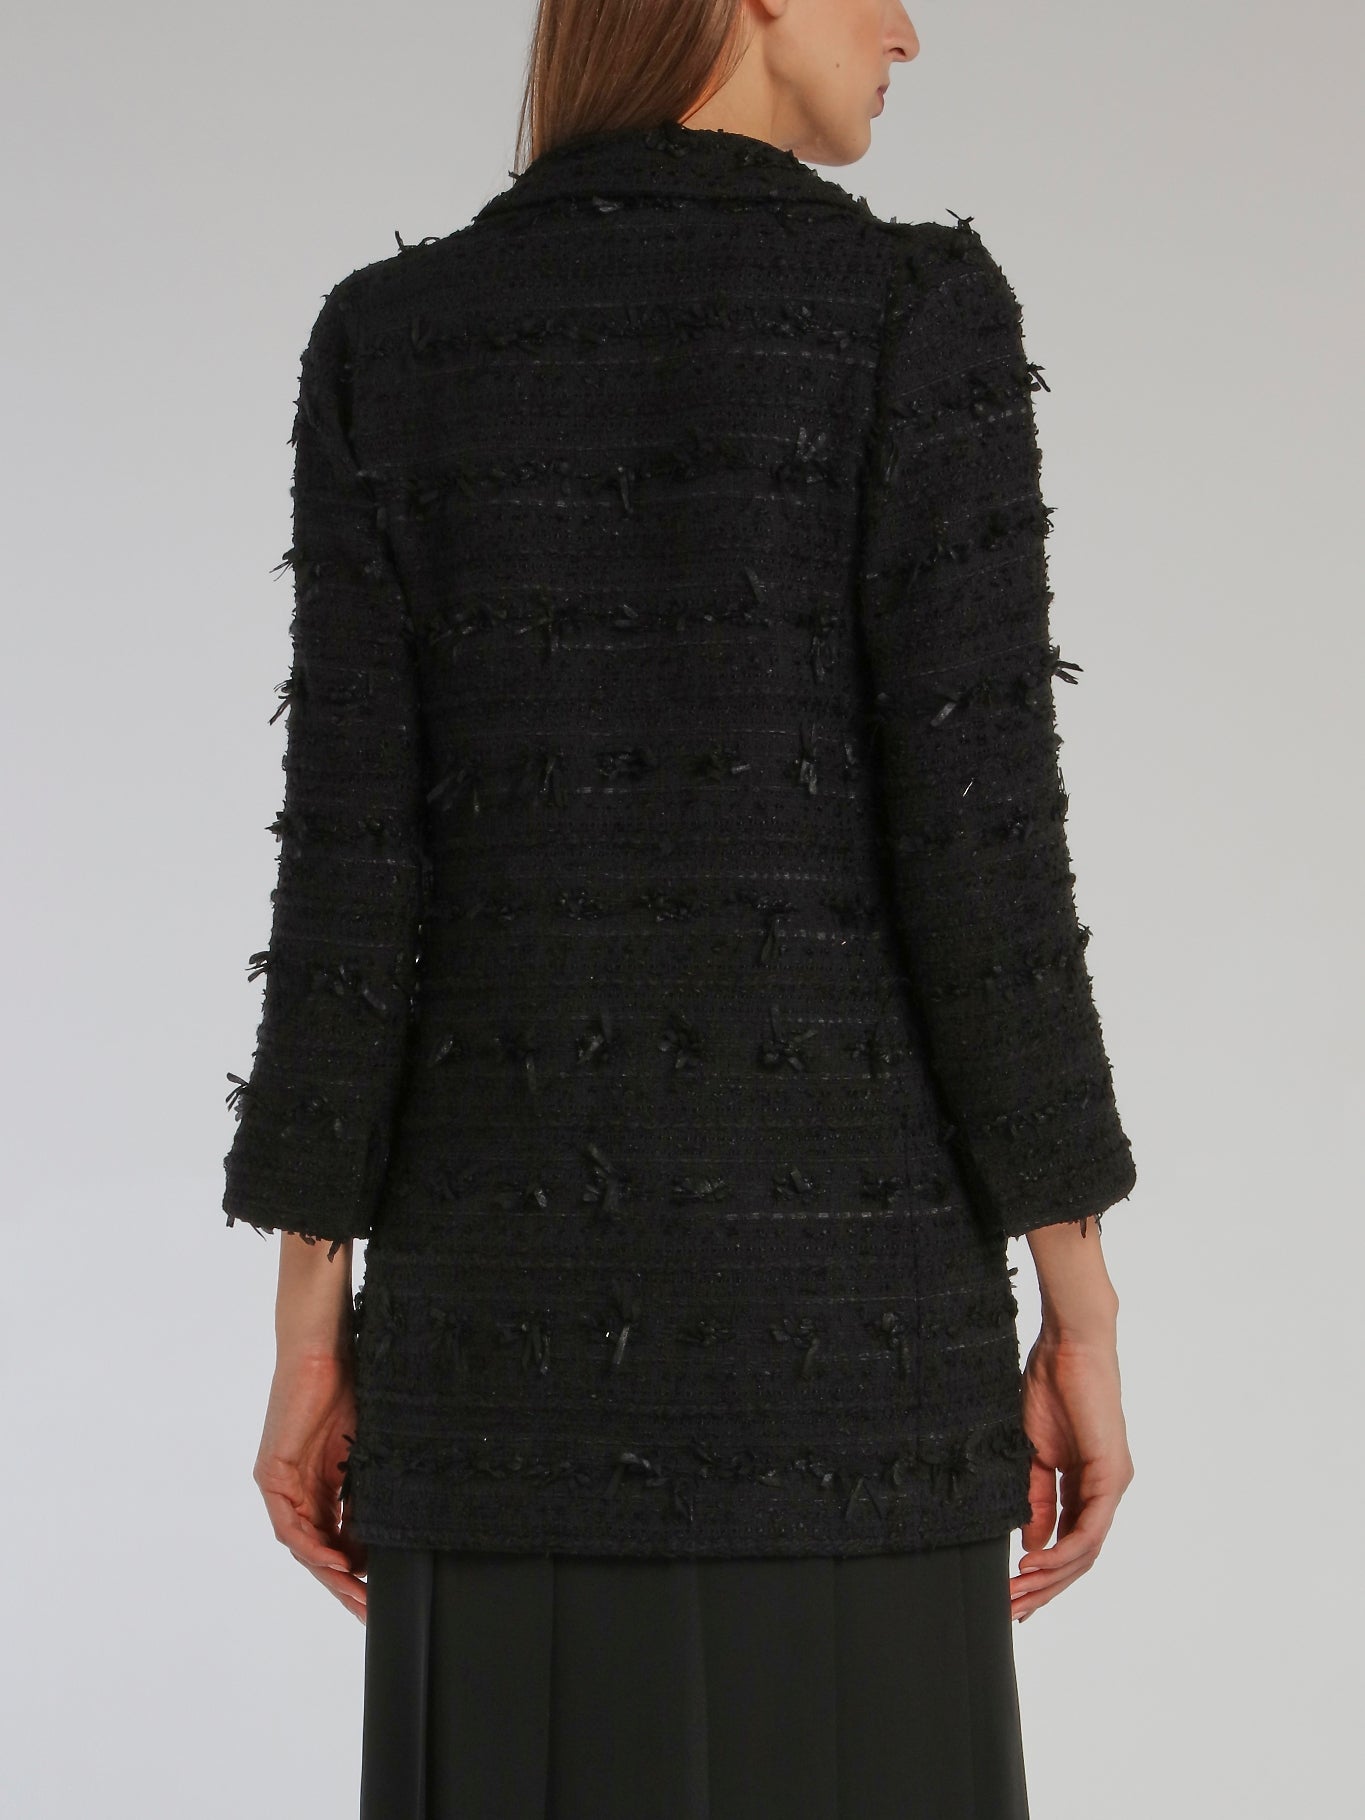 Black Embellished Tweed Jacket